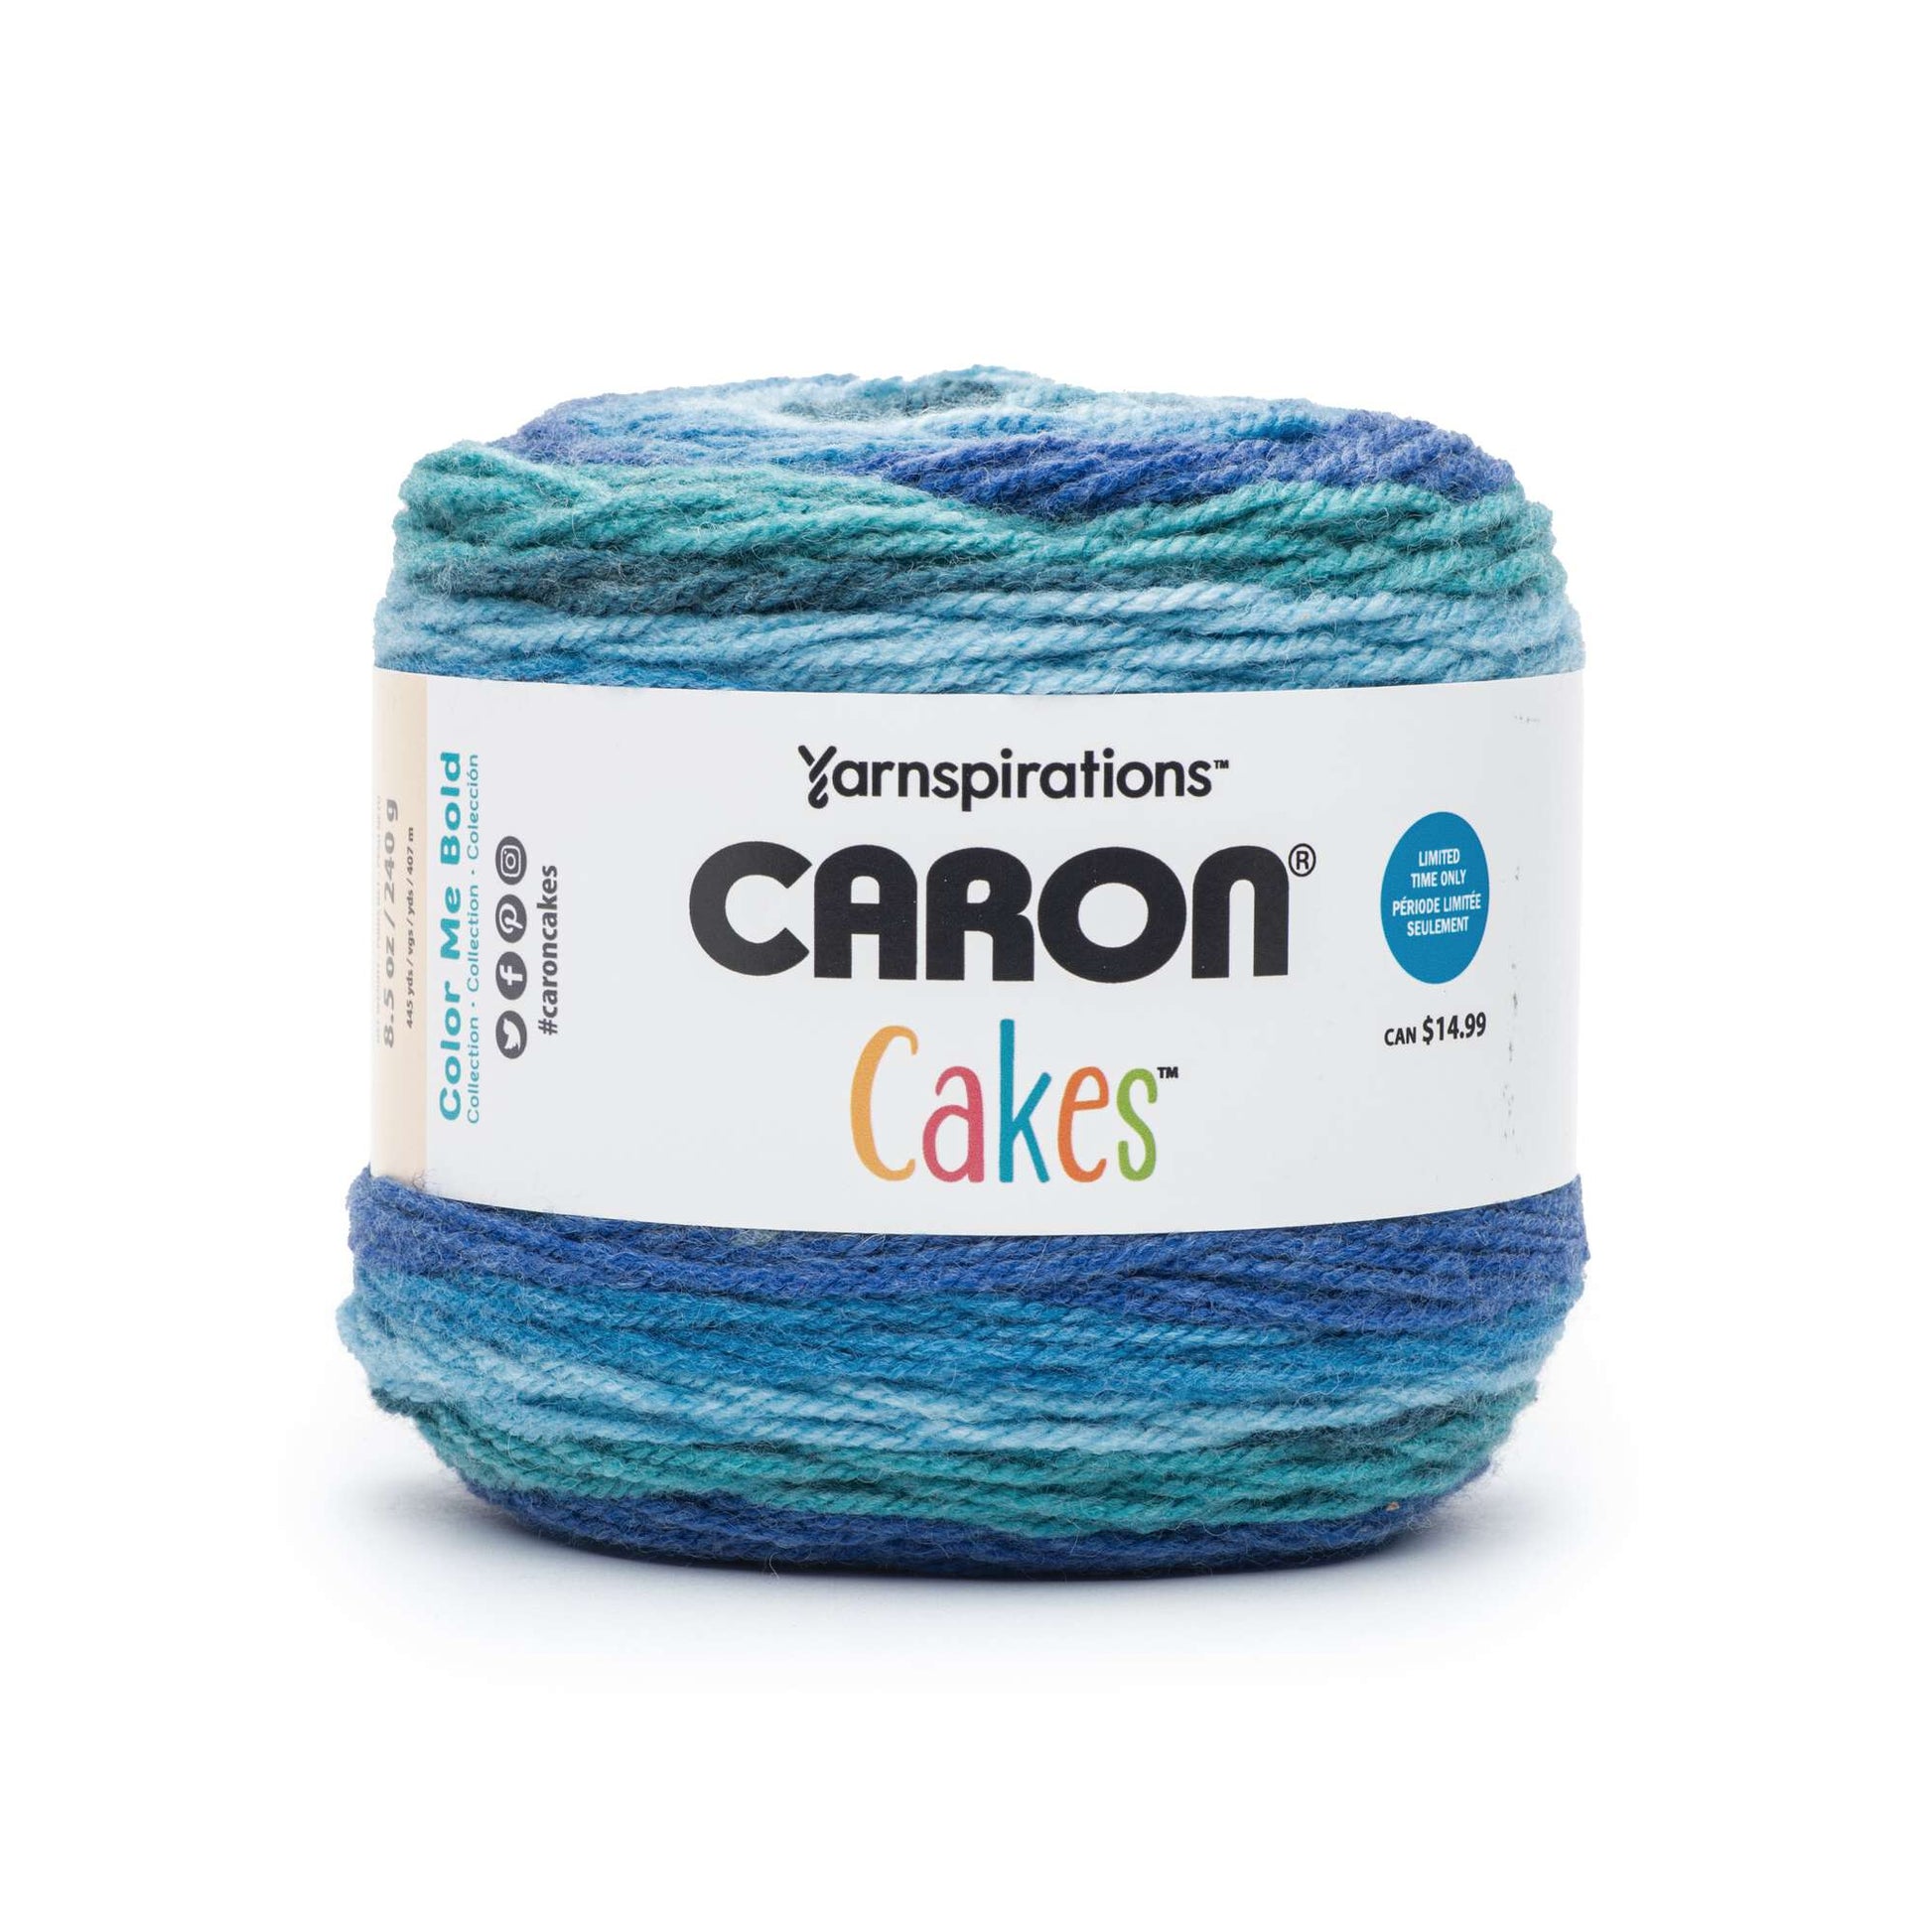 Caron Big Cakes Yarnspirations Toffee Brickle 603 Yards Medium 4 Red Gold  Blue